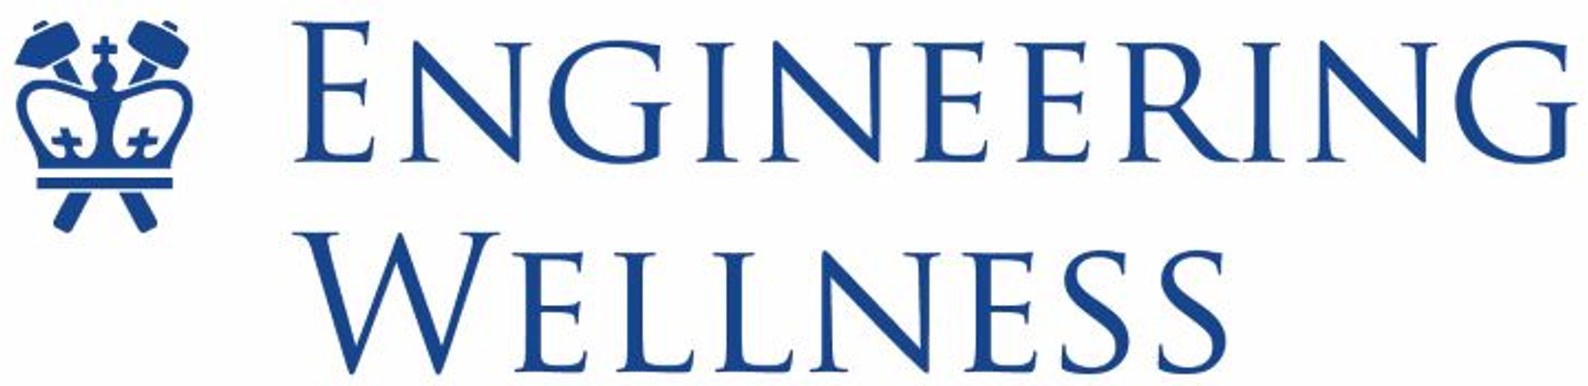 Engineering Wellness logo